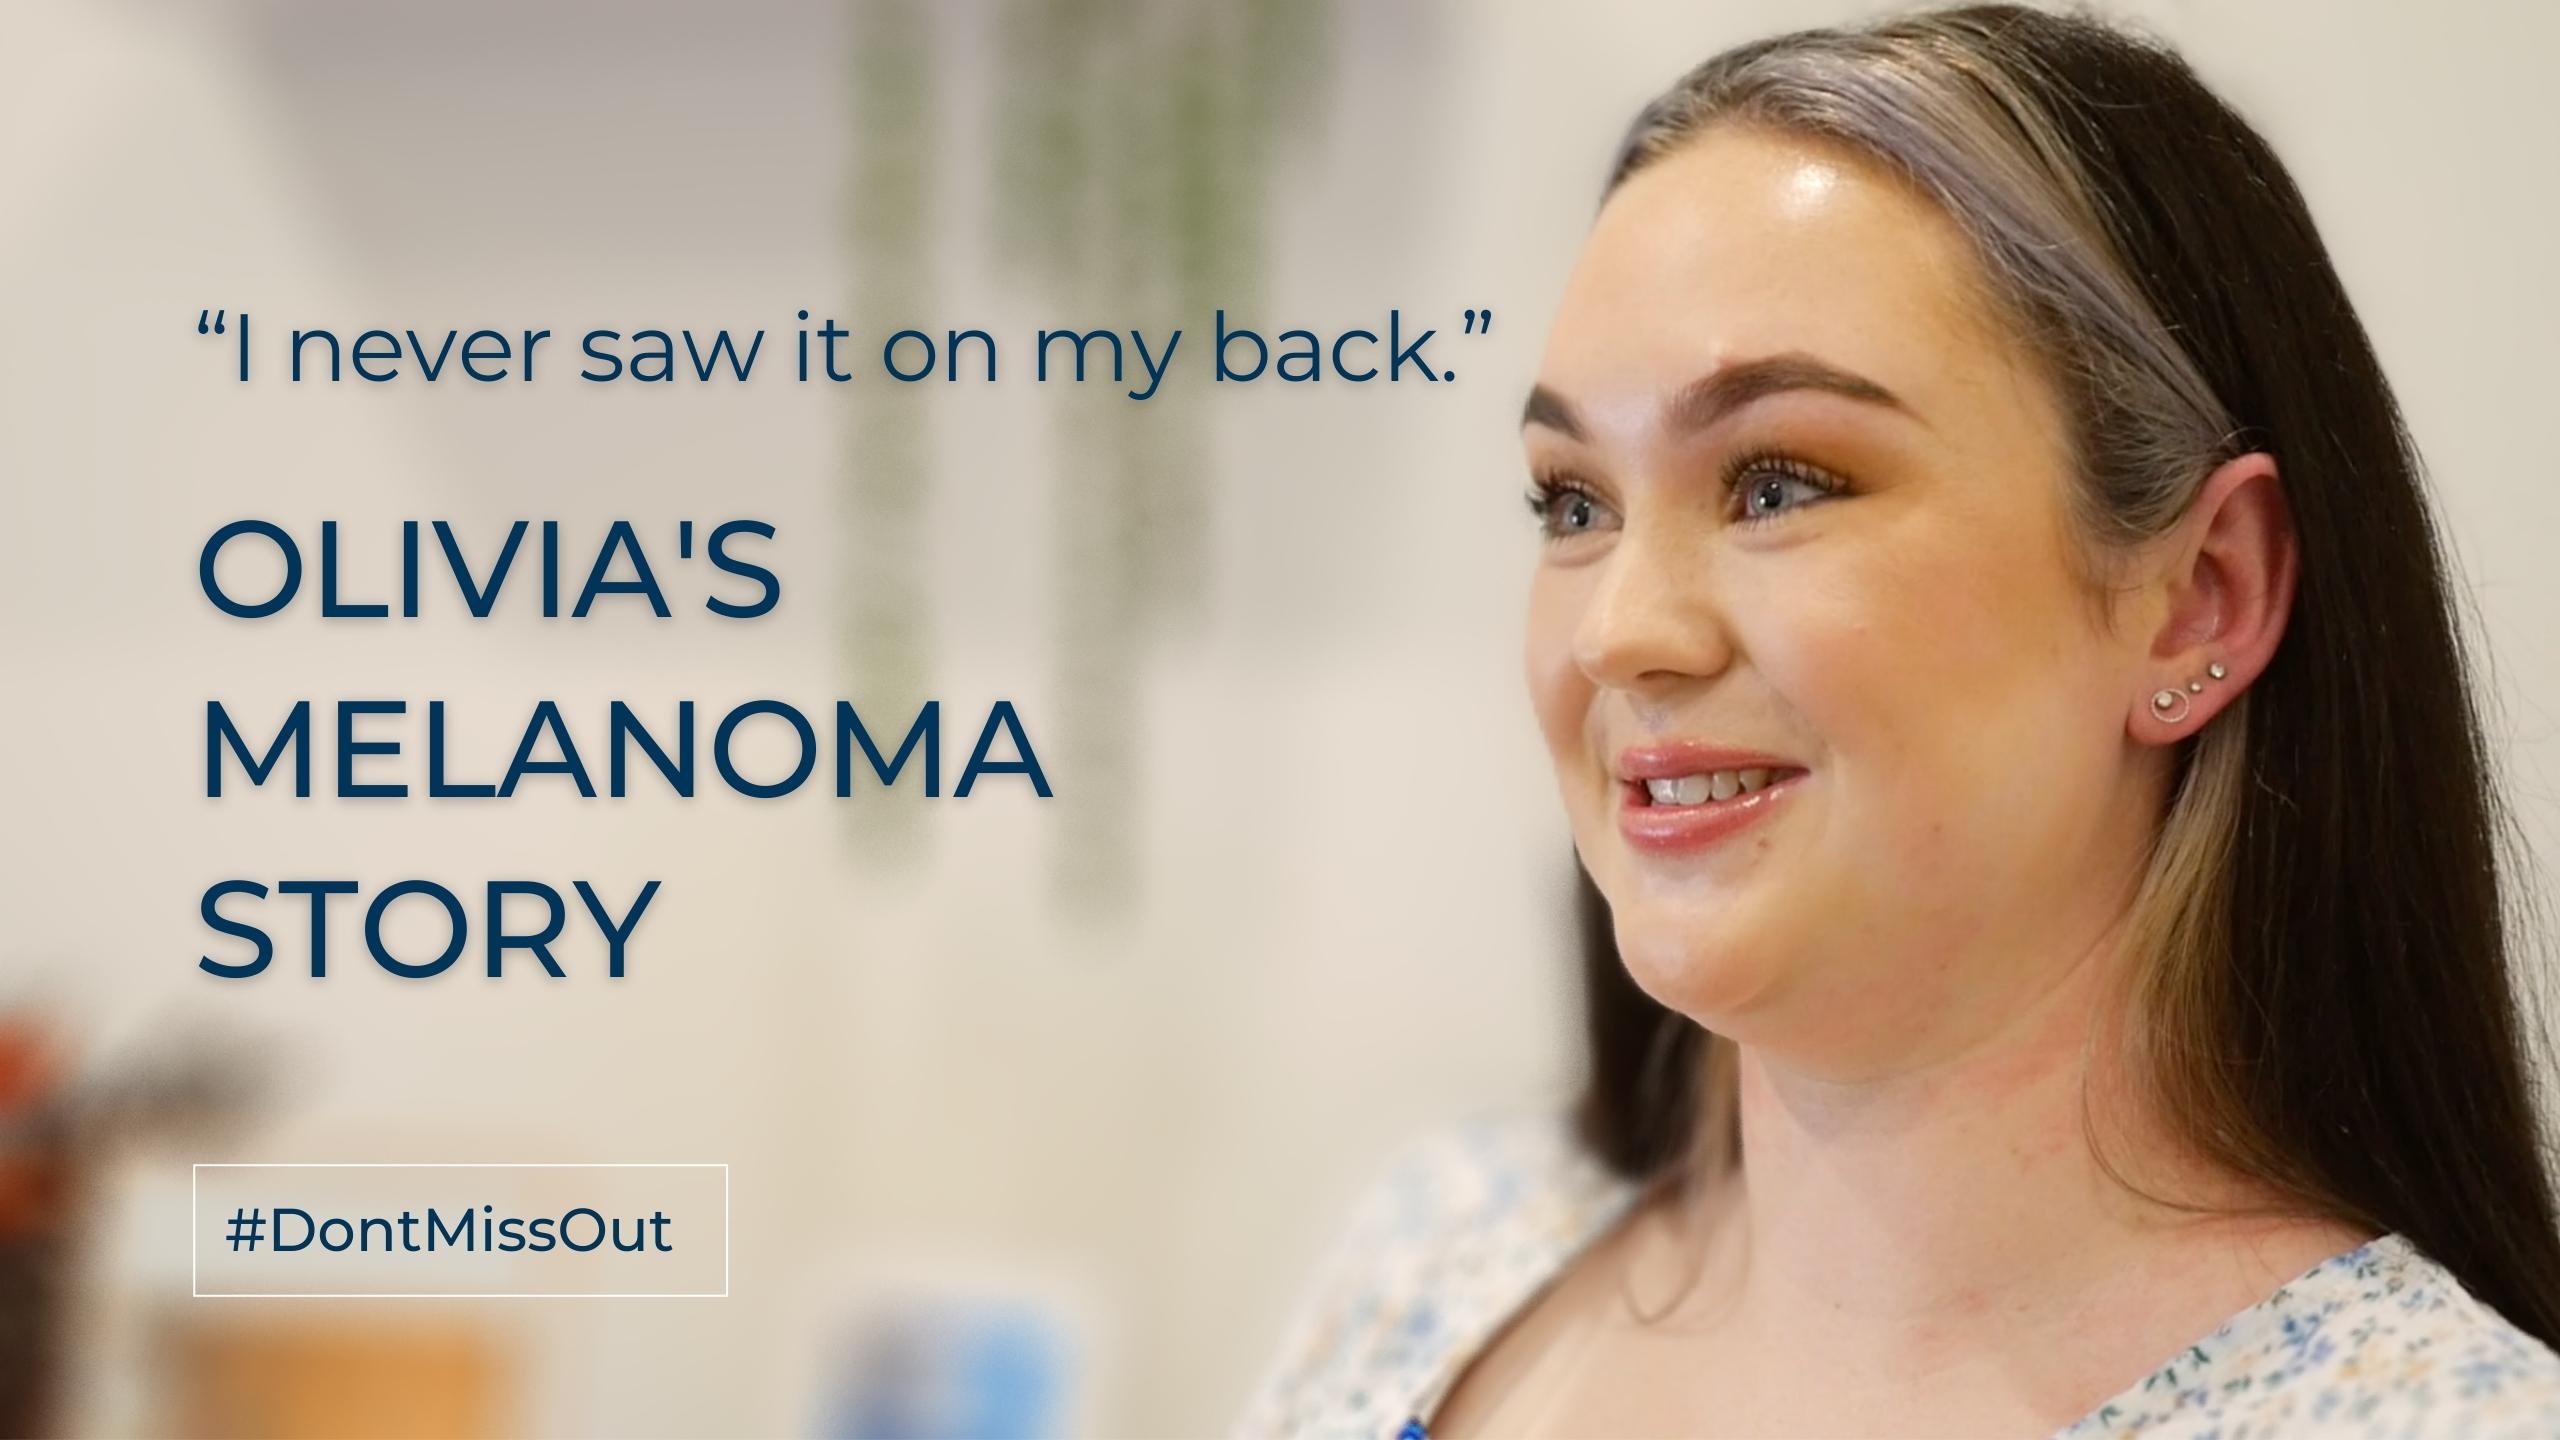 Olivia's melanoma story